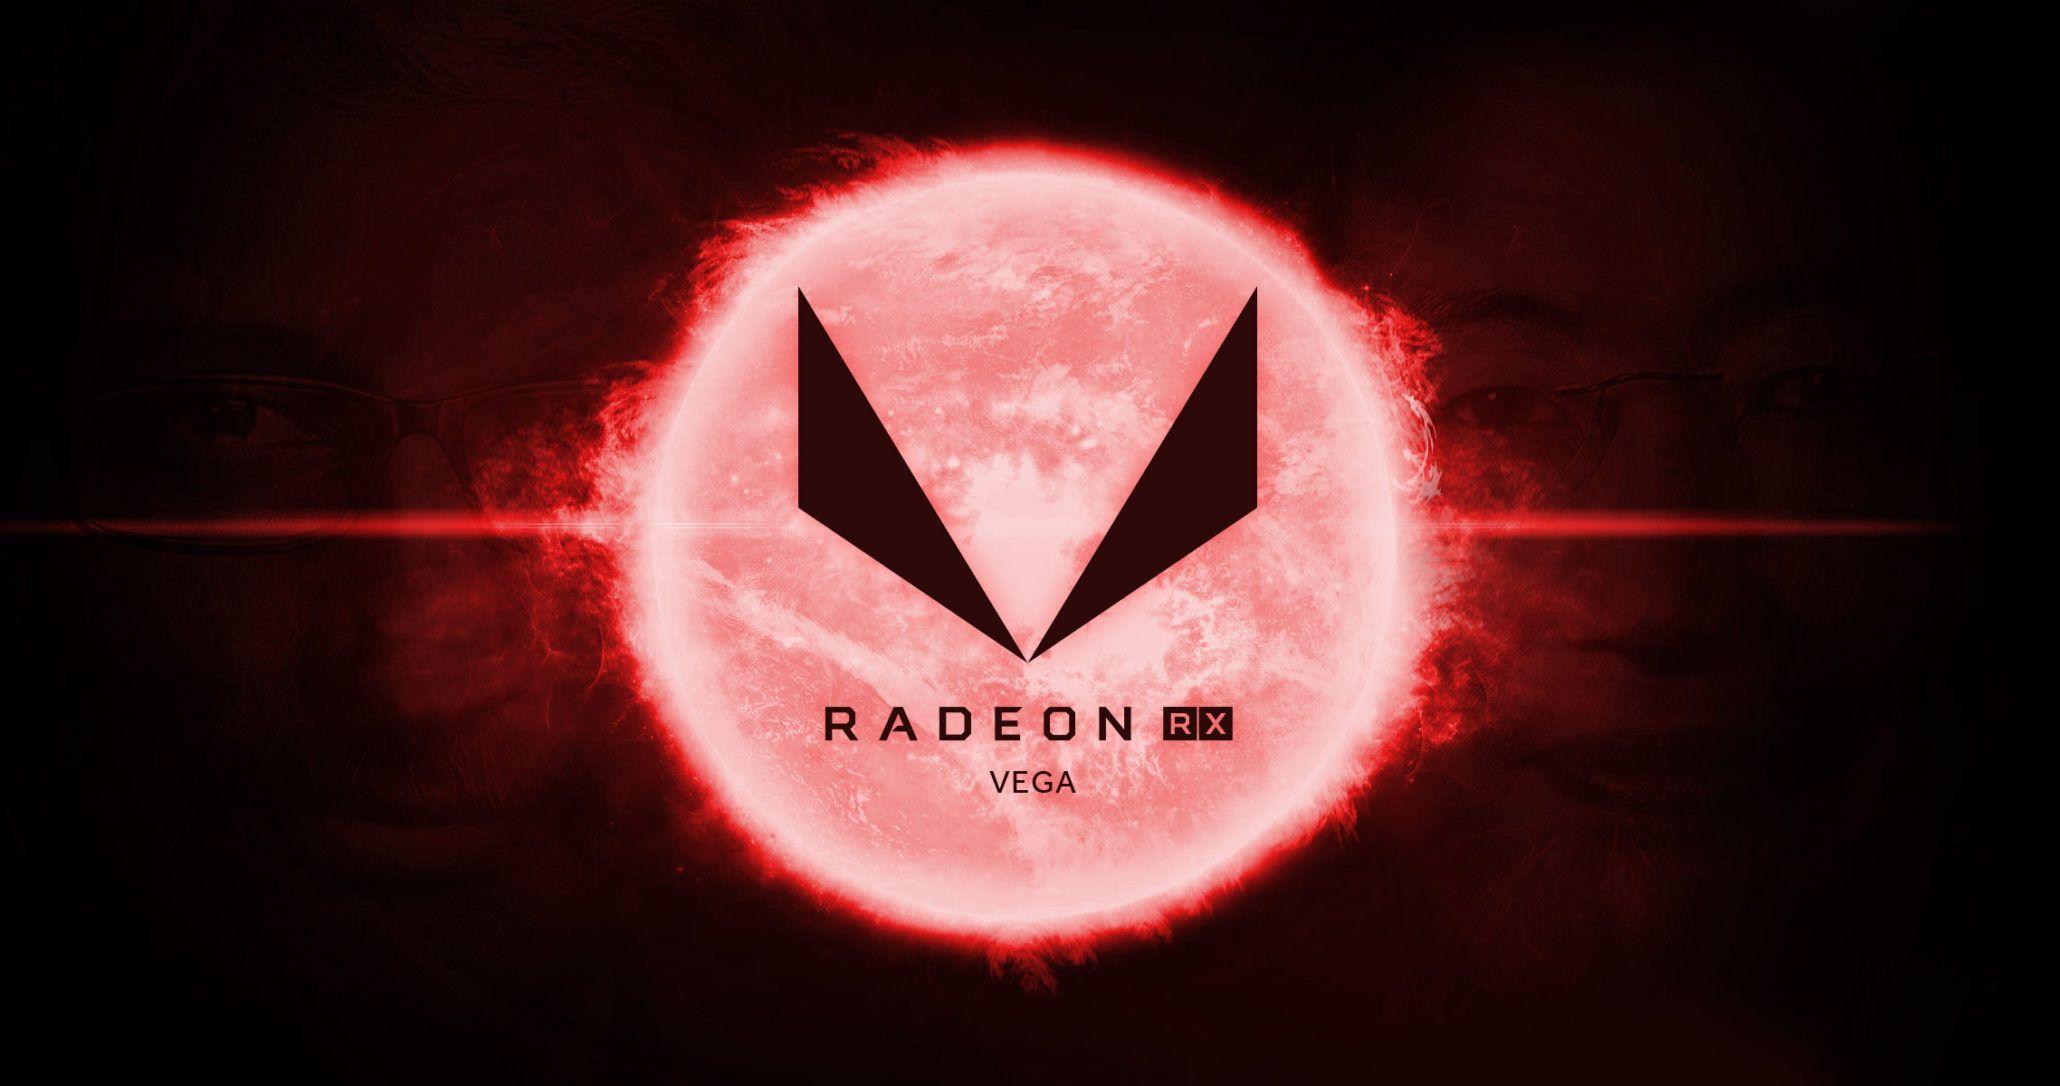 AMD Radeon RX Vega Mainstream GPUs Not Arriving Till Late 2017